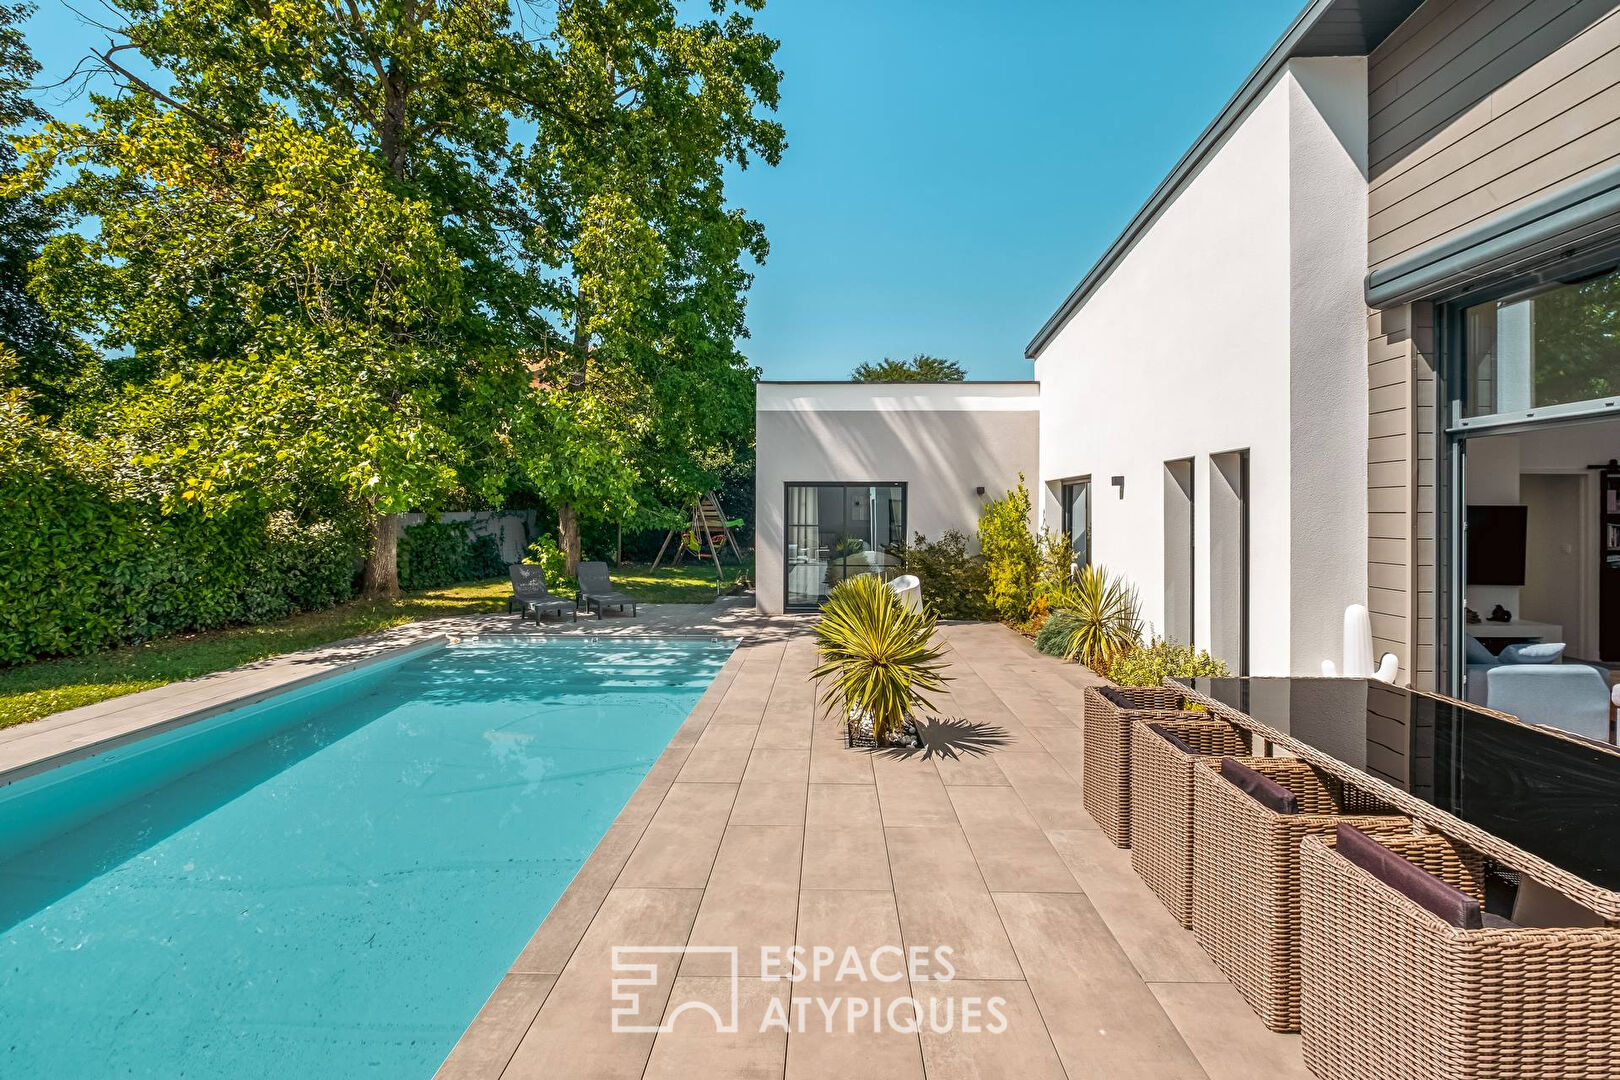 Contemporary villa with swimming pool